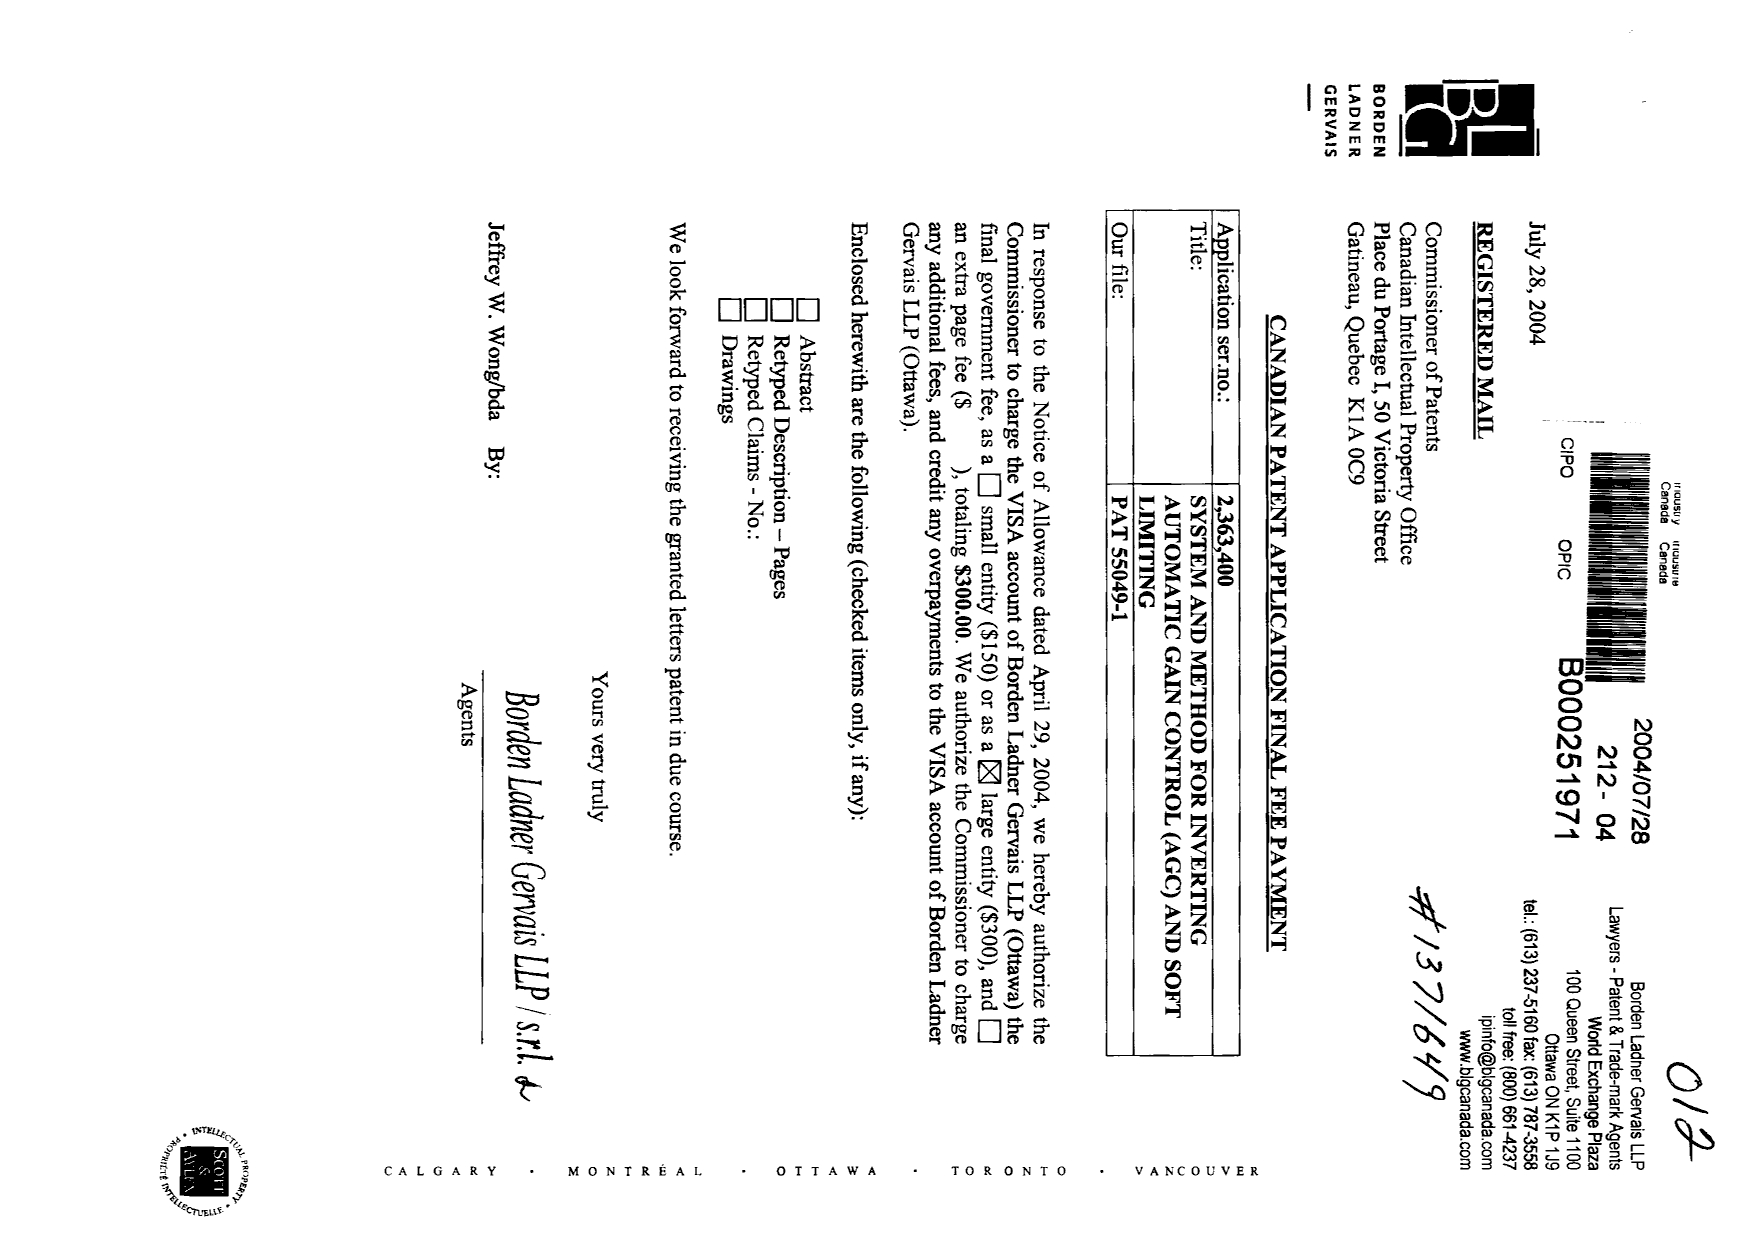 Canadian Patent Document 2363400. Correspondence 20040728. Image 1 of 1